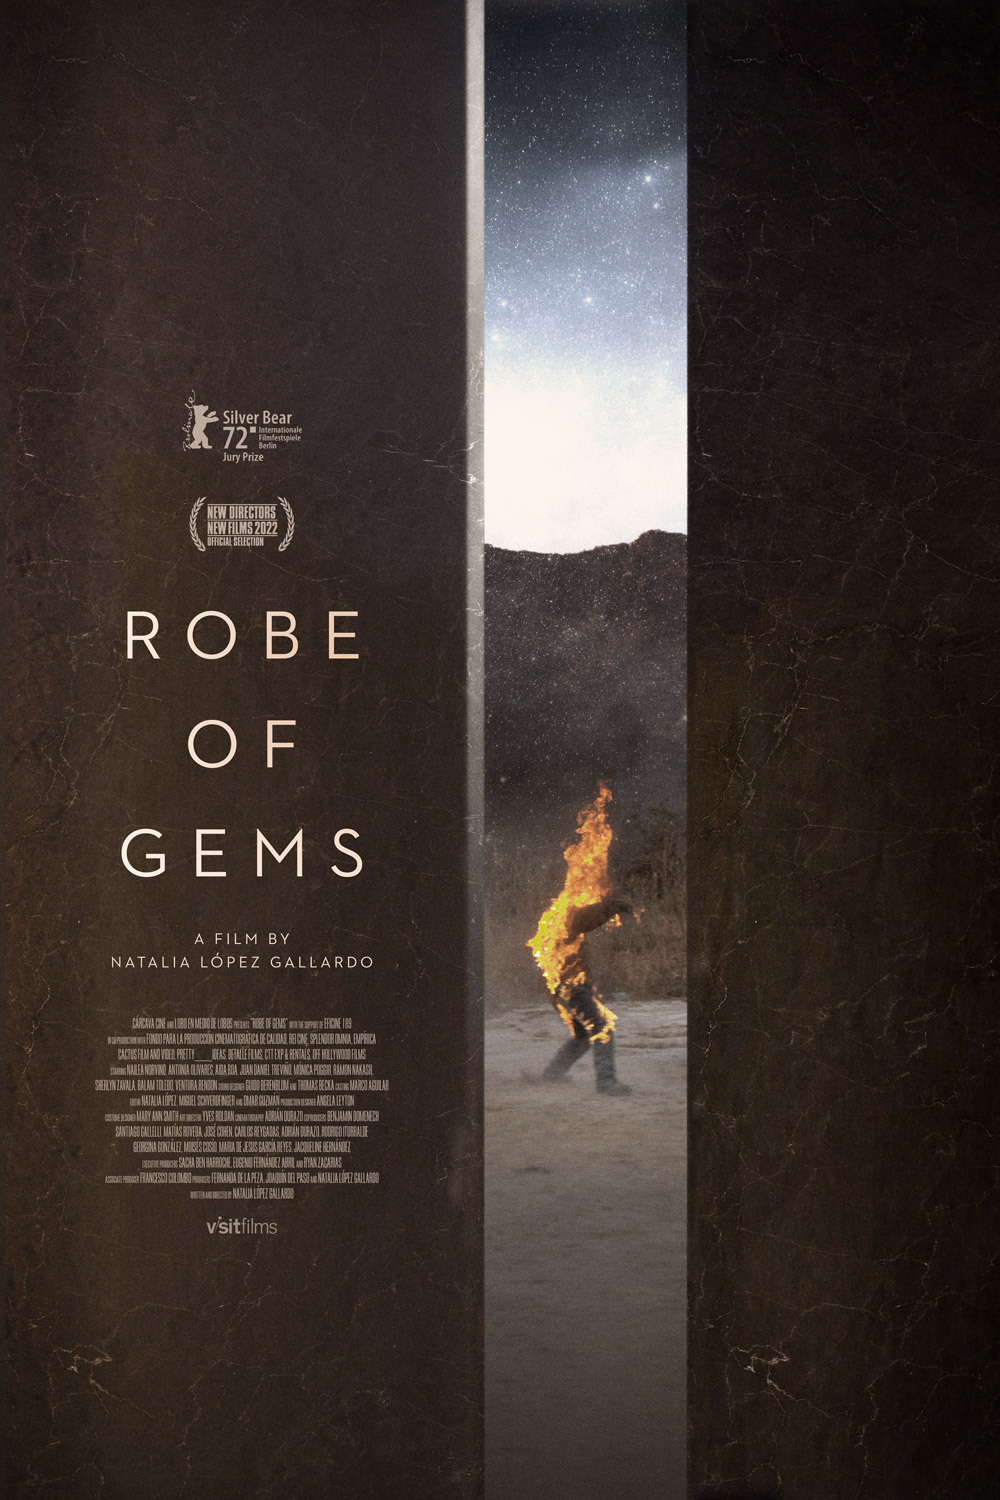 Movie poster for Robe of Gems, burning man